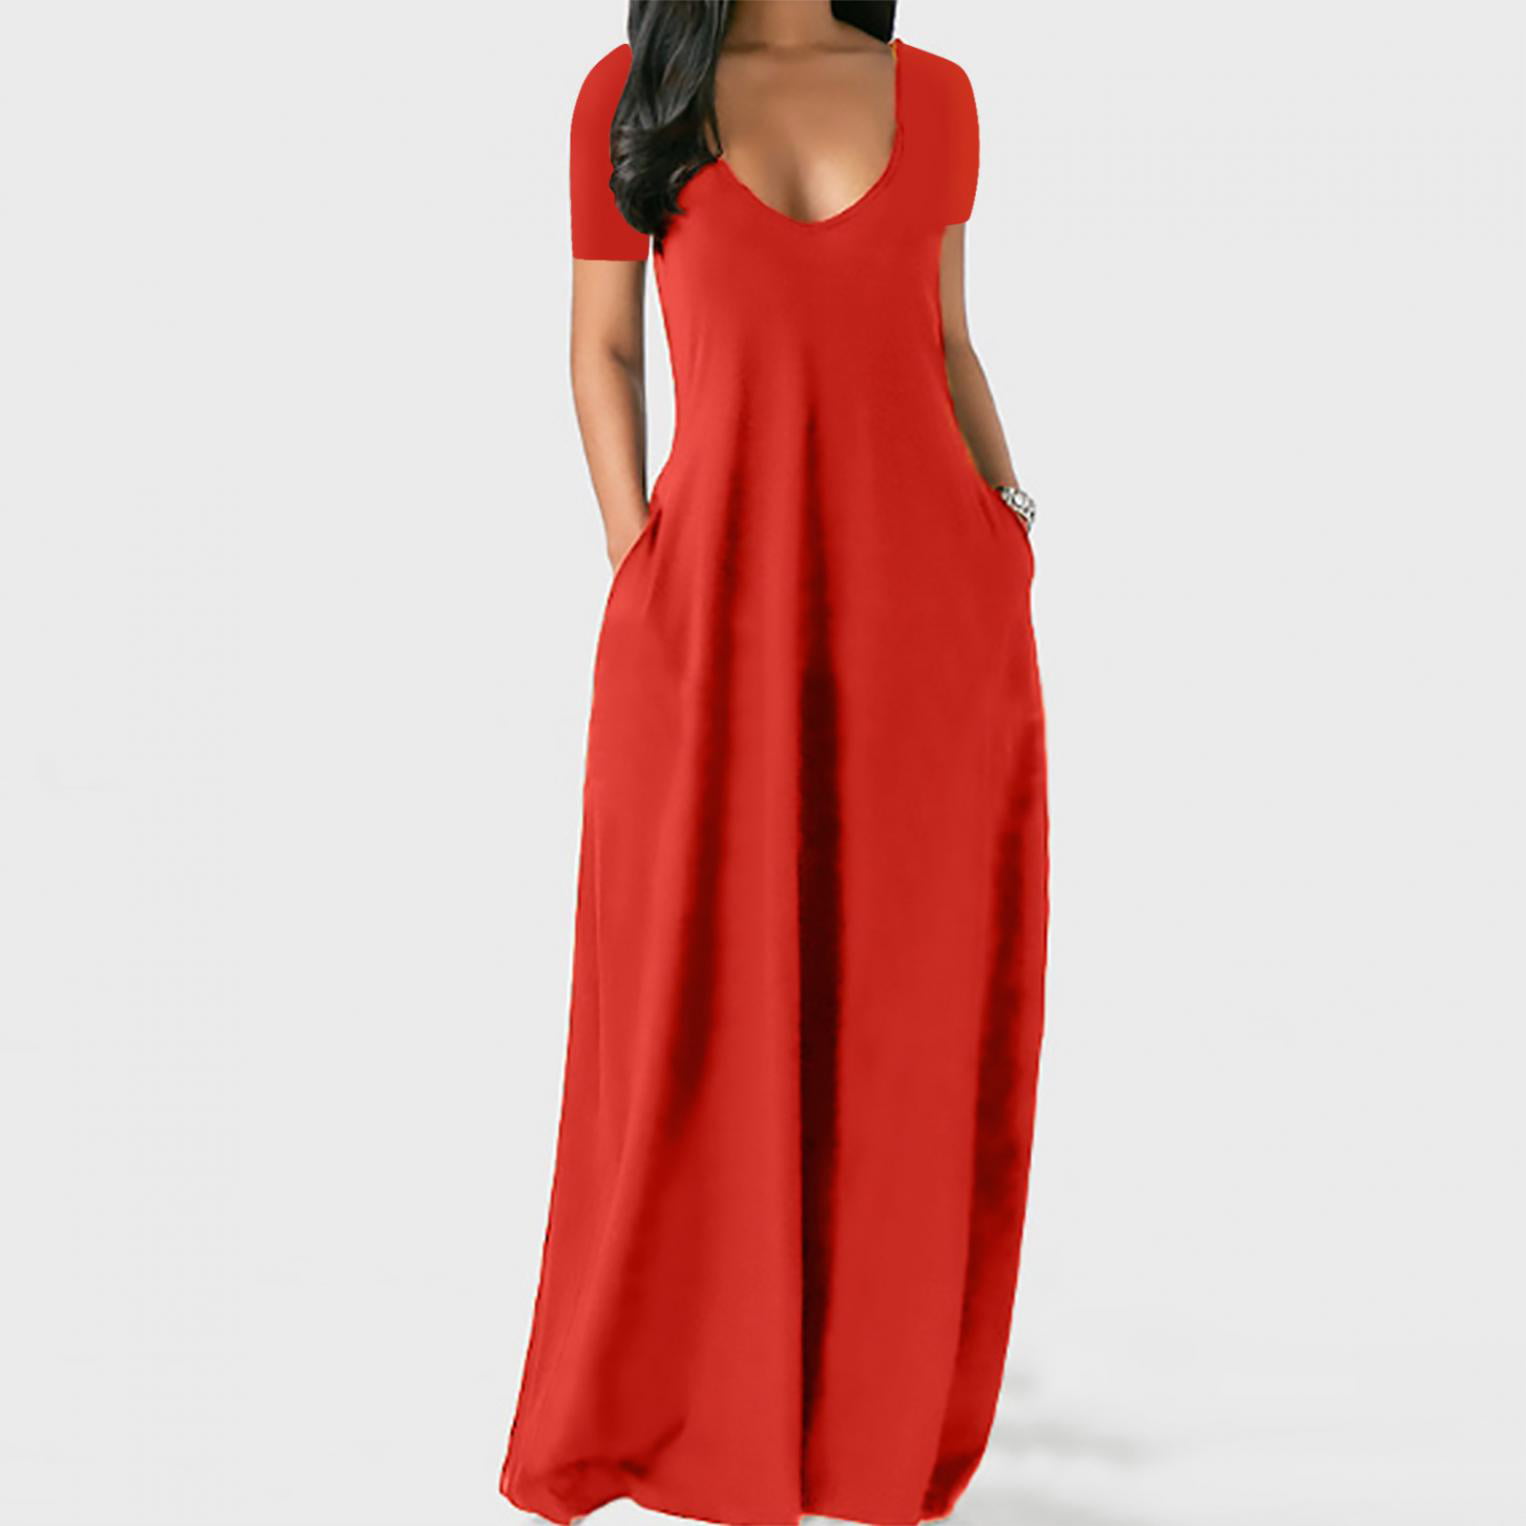 Lenago Women's Plus Size Deep V-Neck Standard-Fit Short Sleeve Solid Maxi Party Dress - image 3 of 6